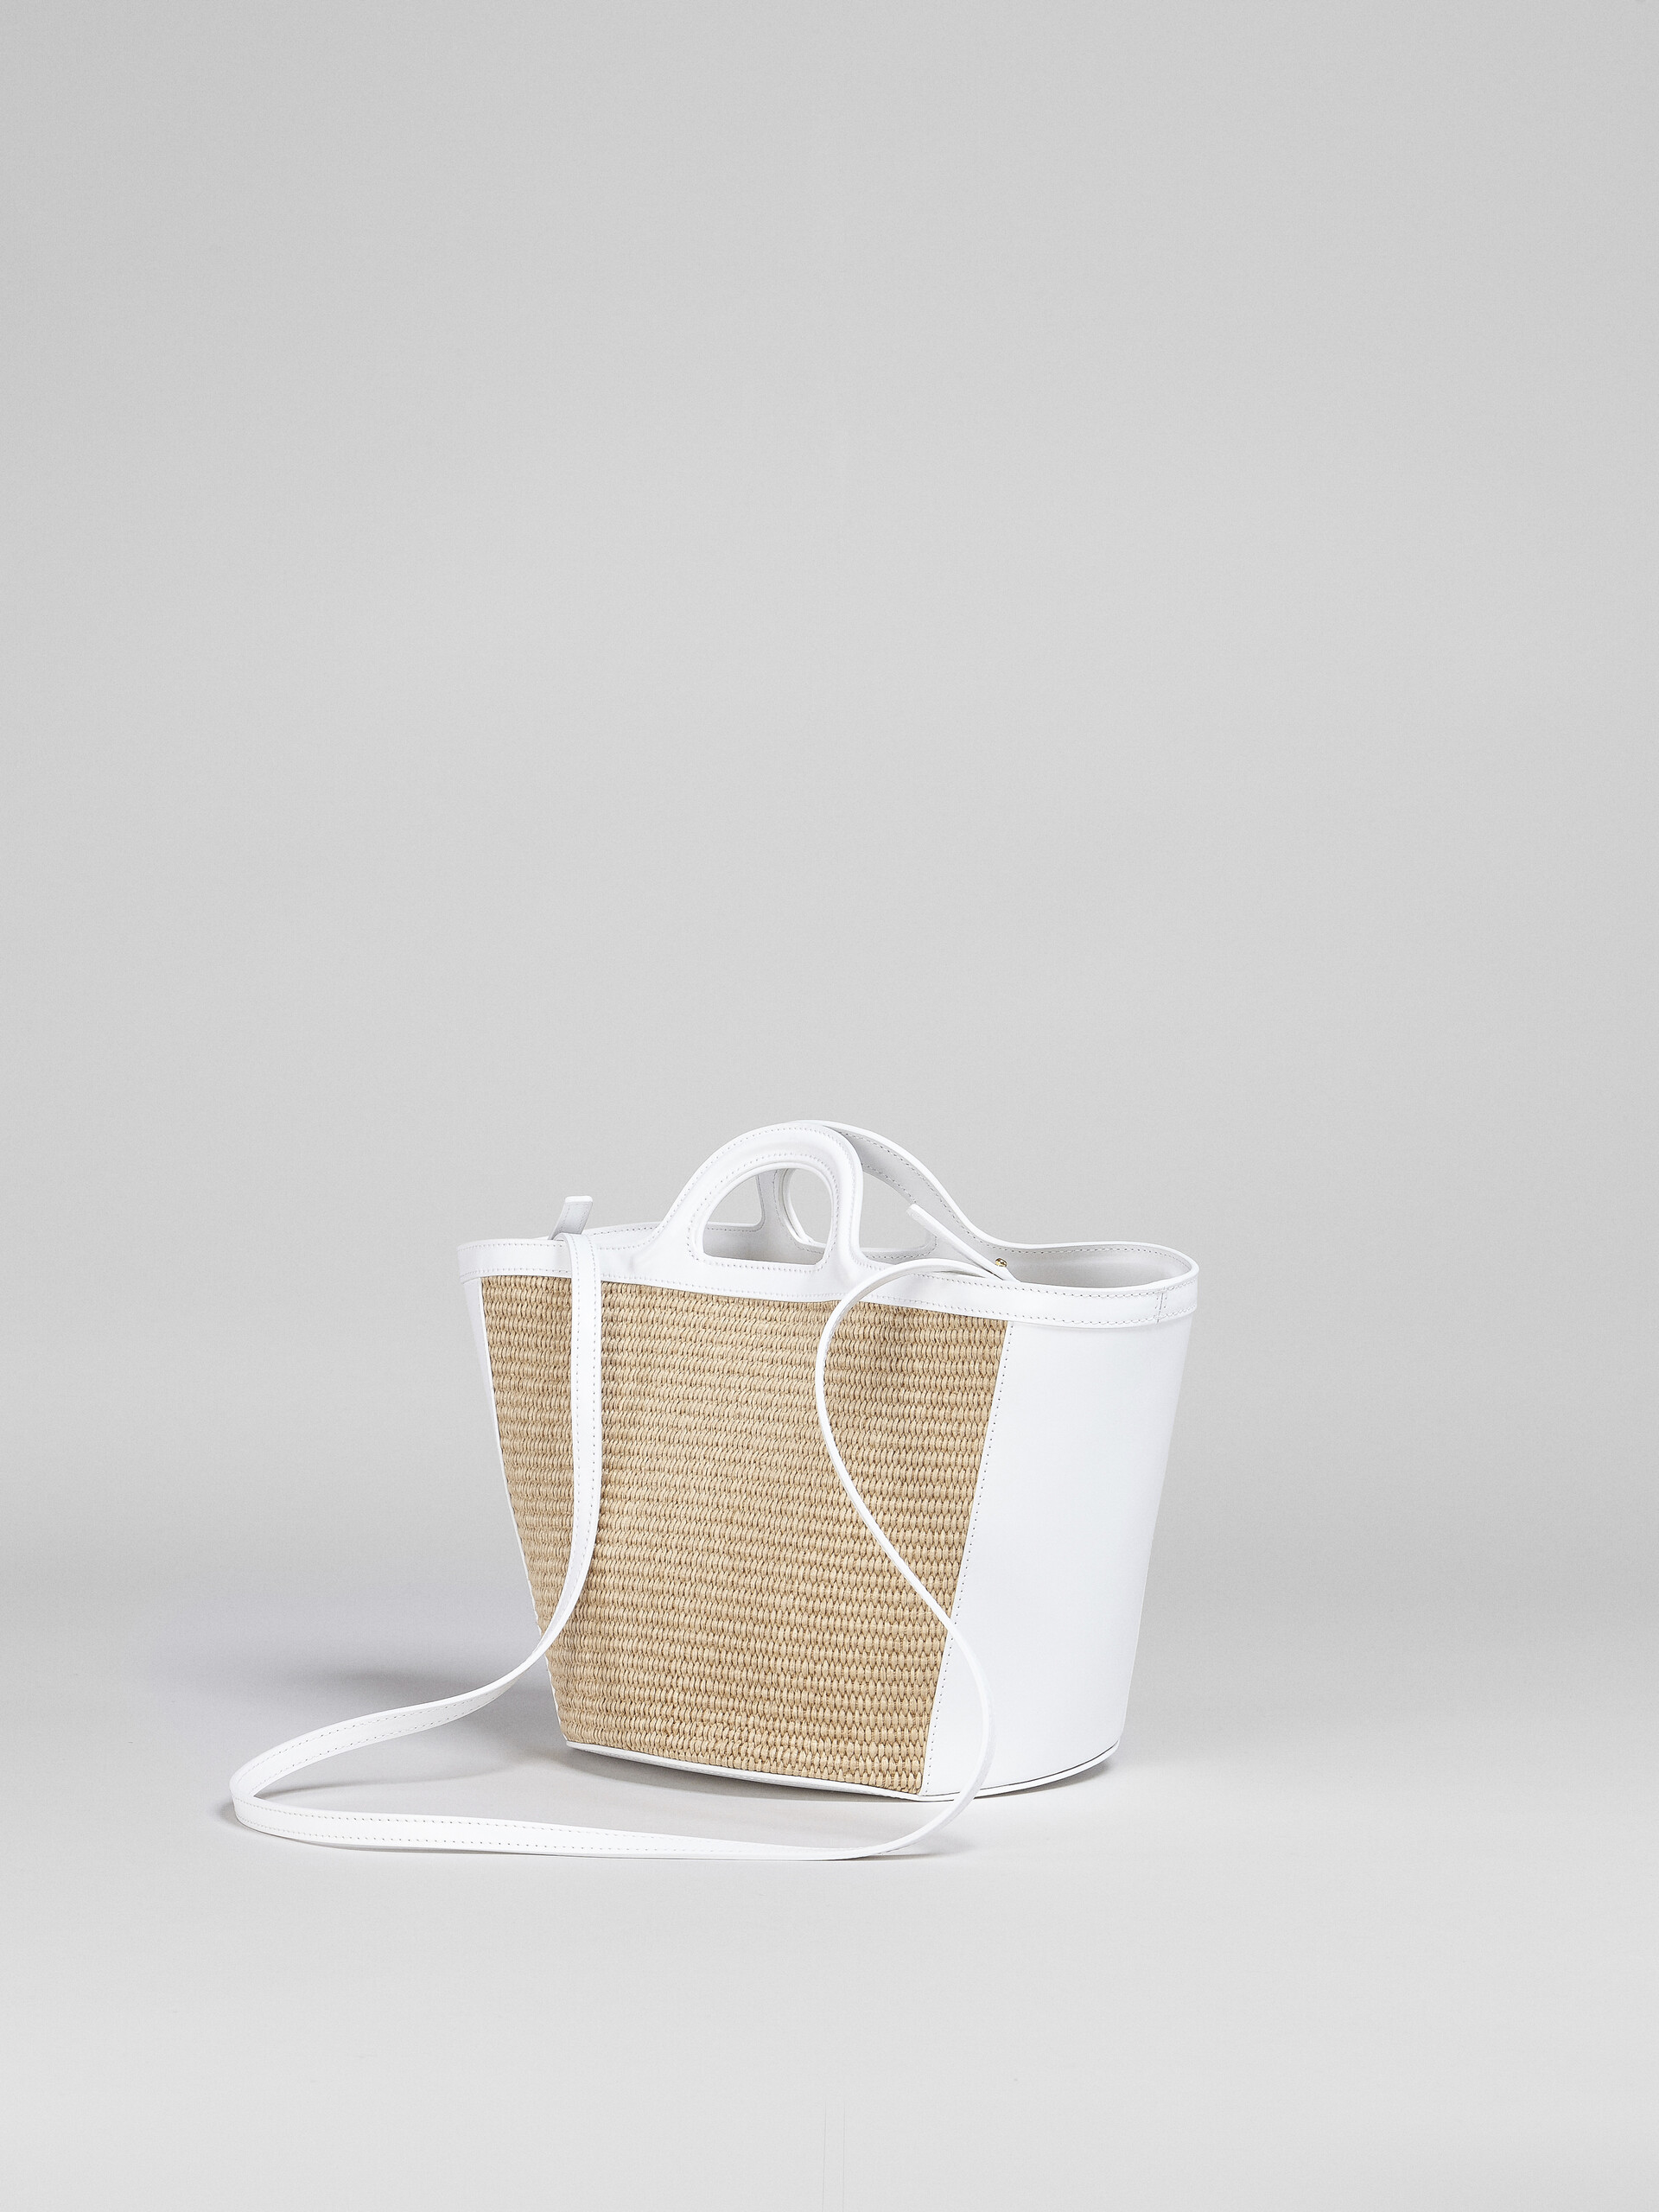 Tropicalia Small Bag in white leather and raffia - Handbag - Image 3